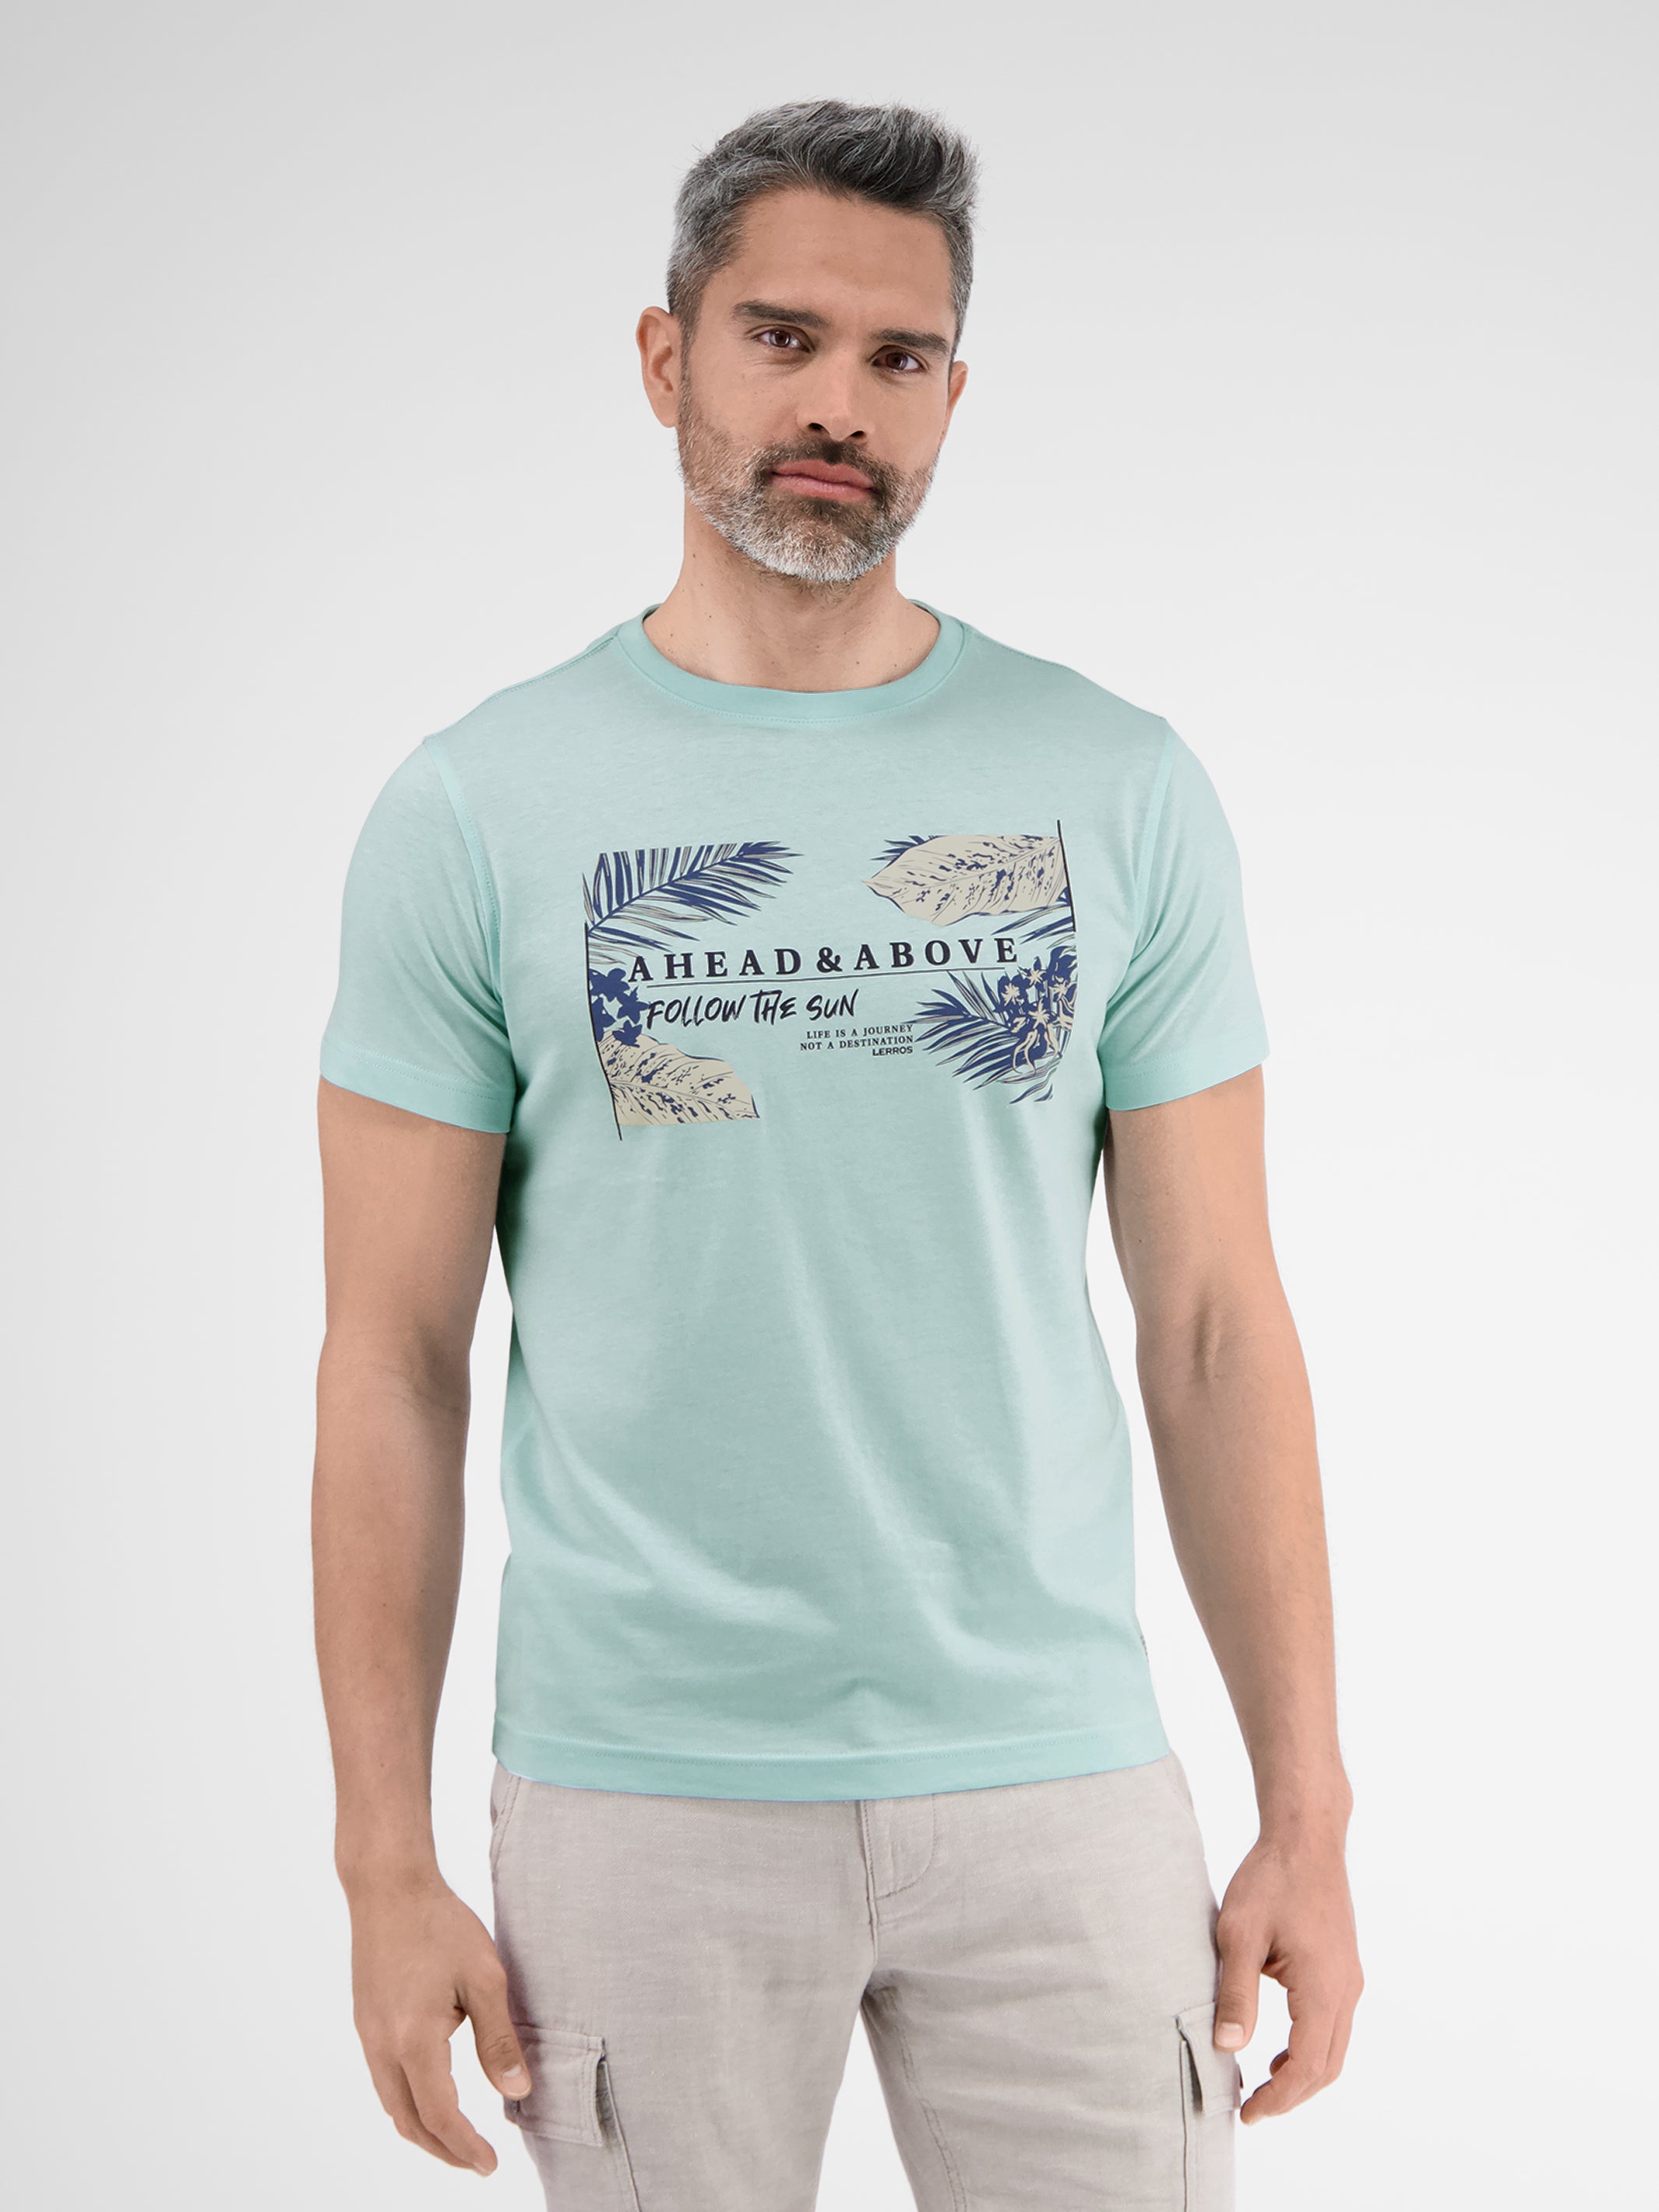 with photo – T-shirt SHOP print design LERROS